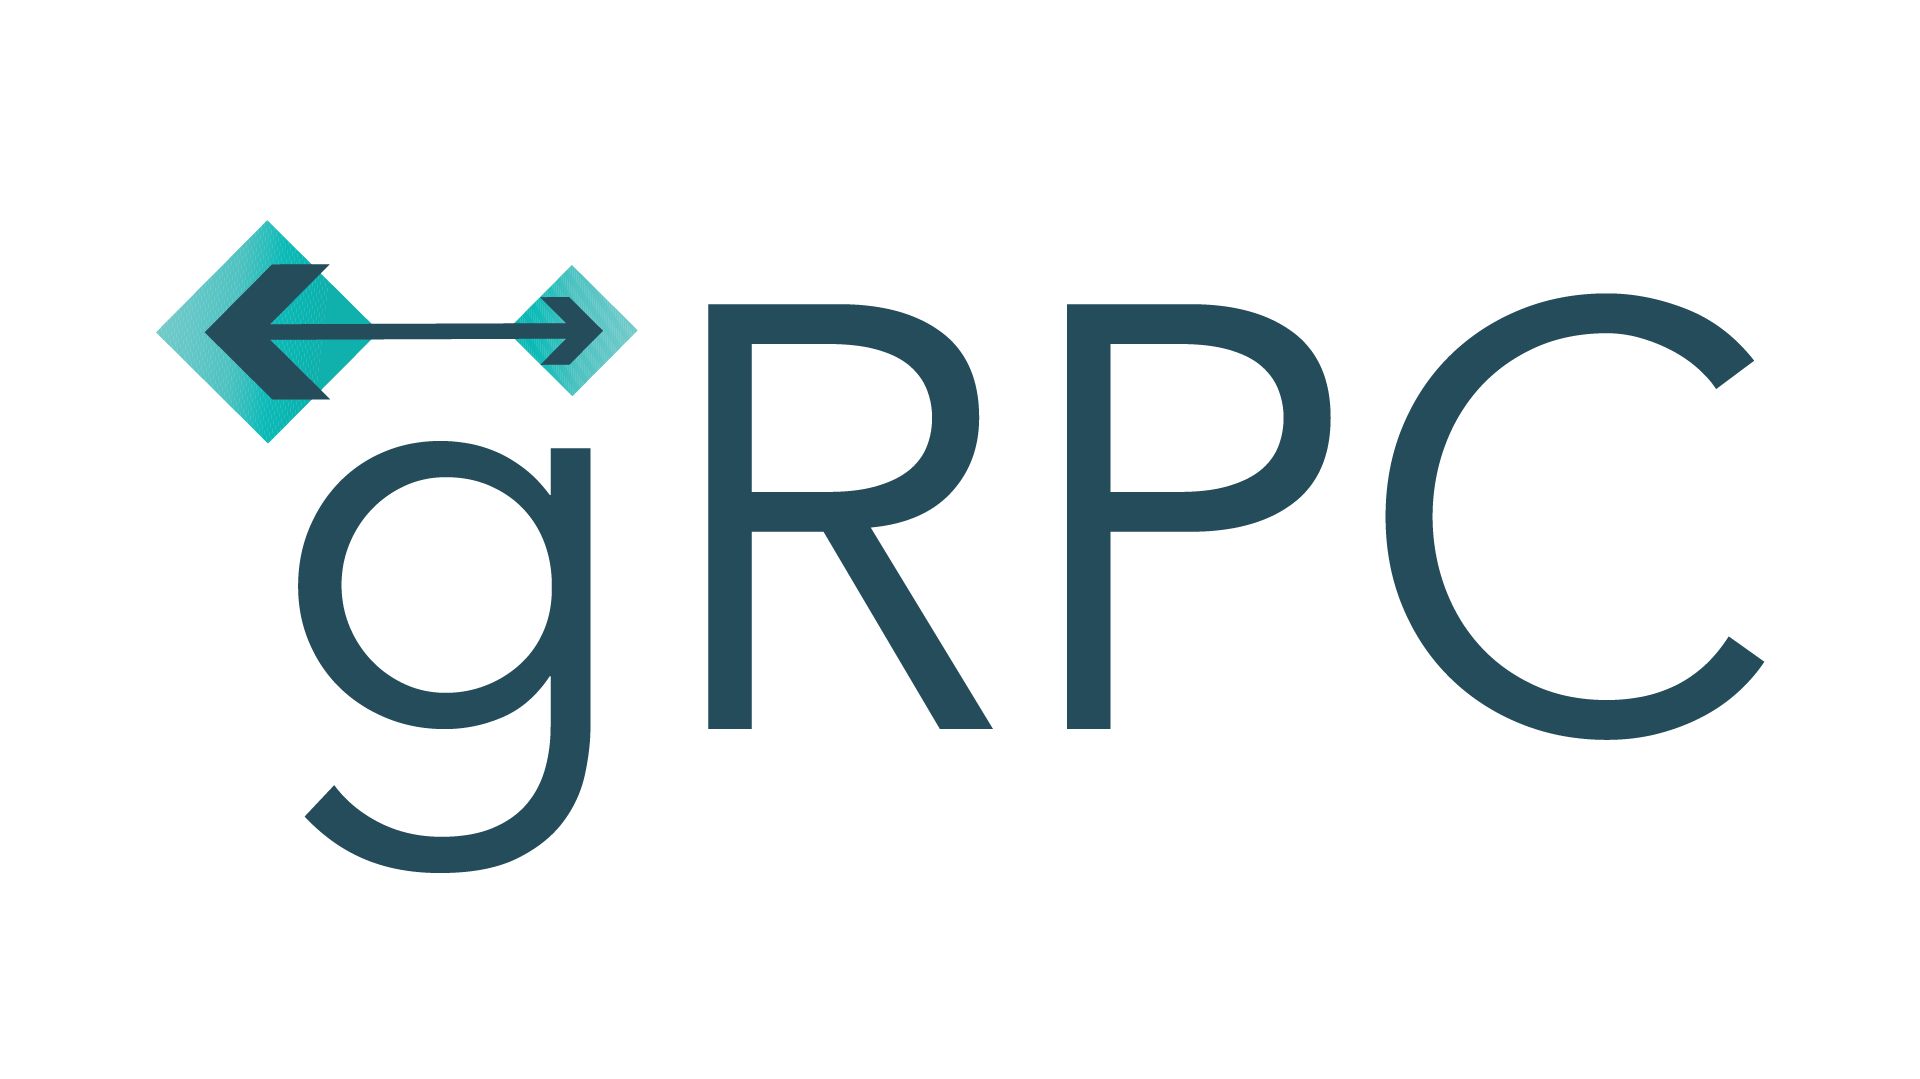 GRPC (Google Remote Procedure Call) là gì?